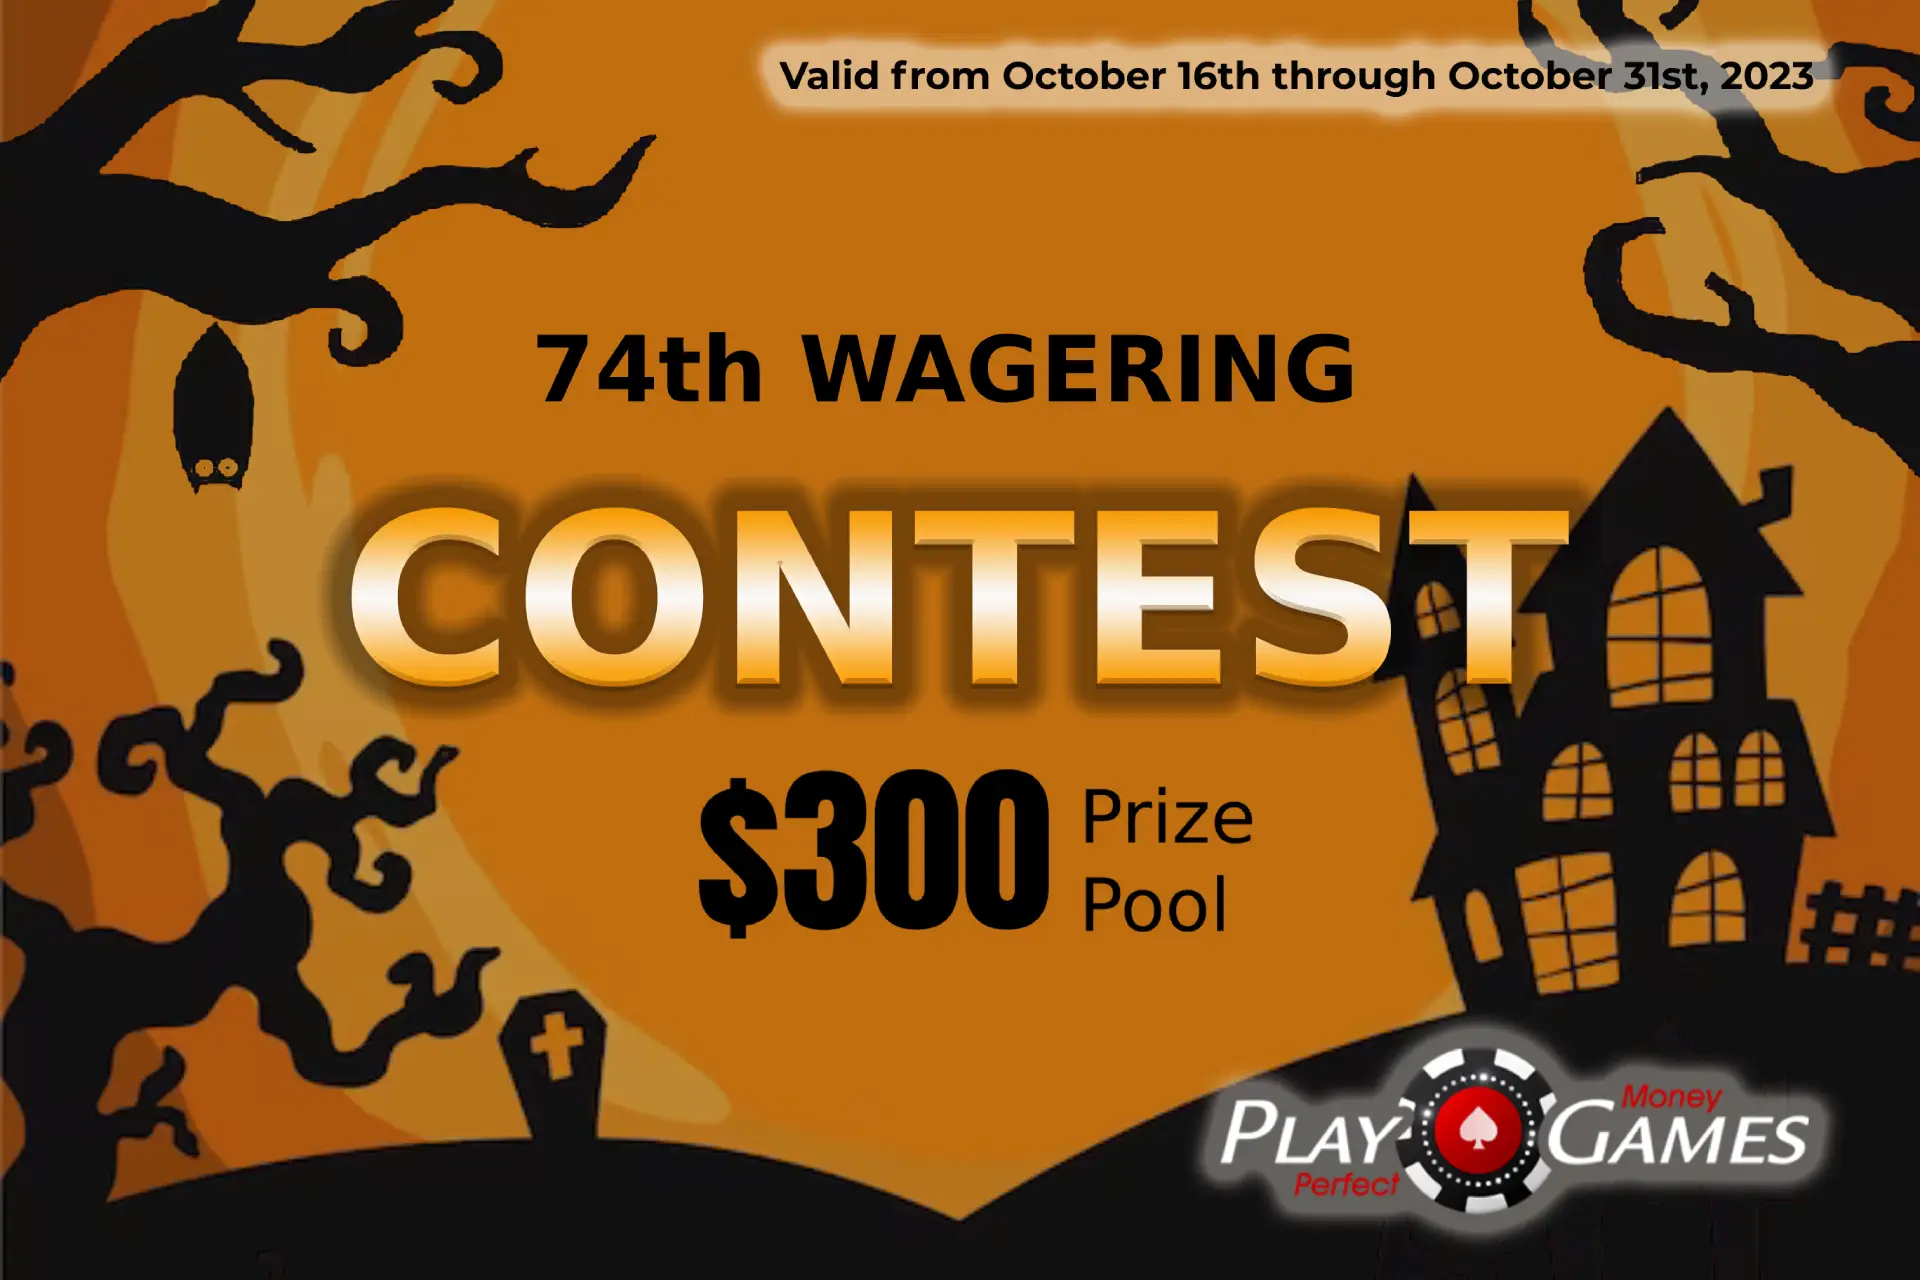 74 wagering contest - playperfectmoneygames.com